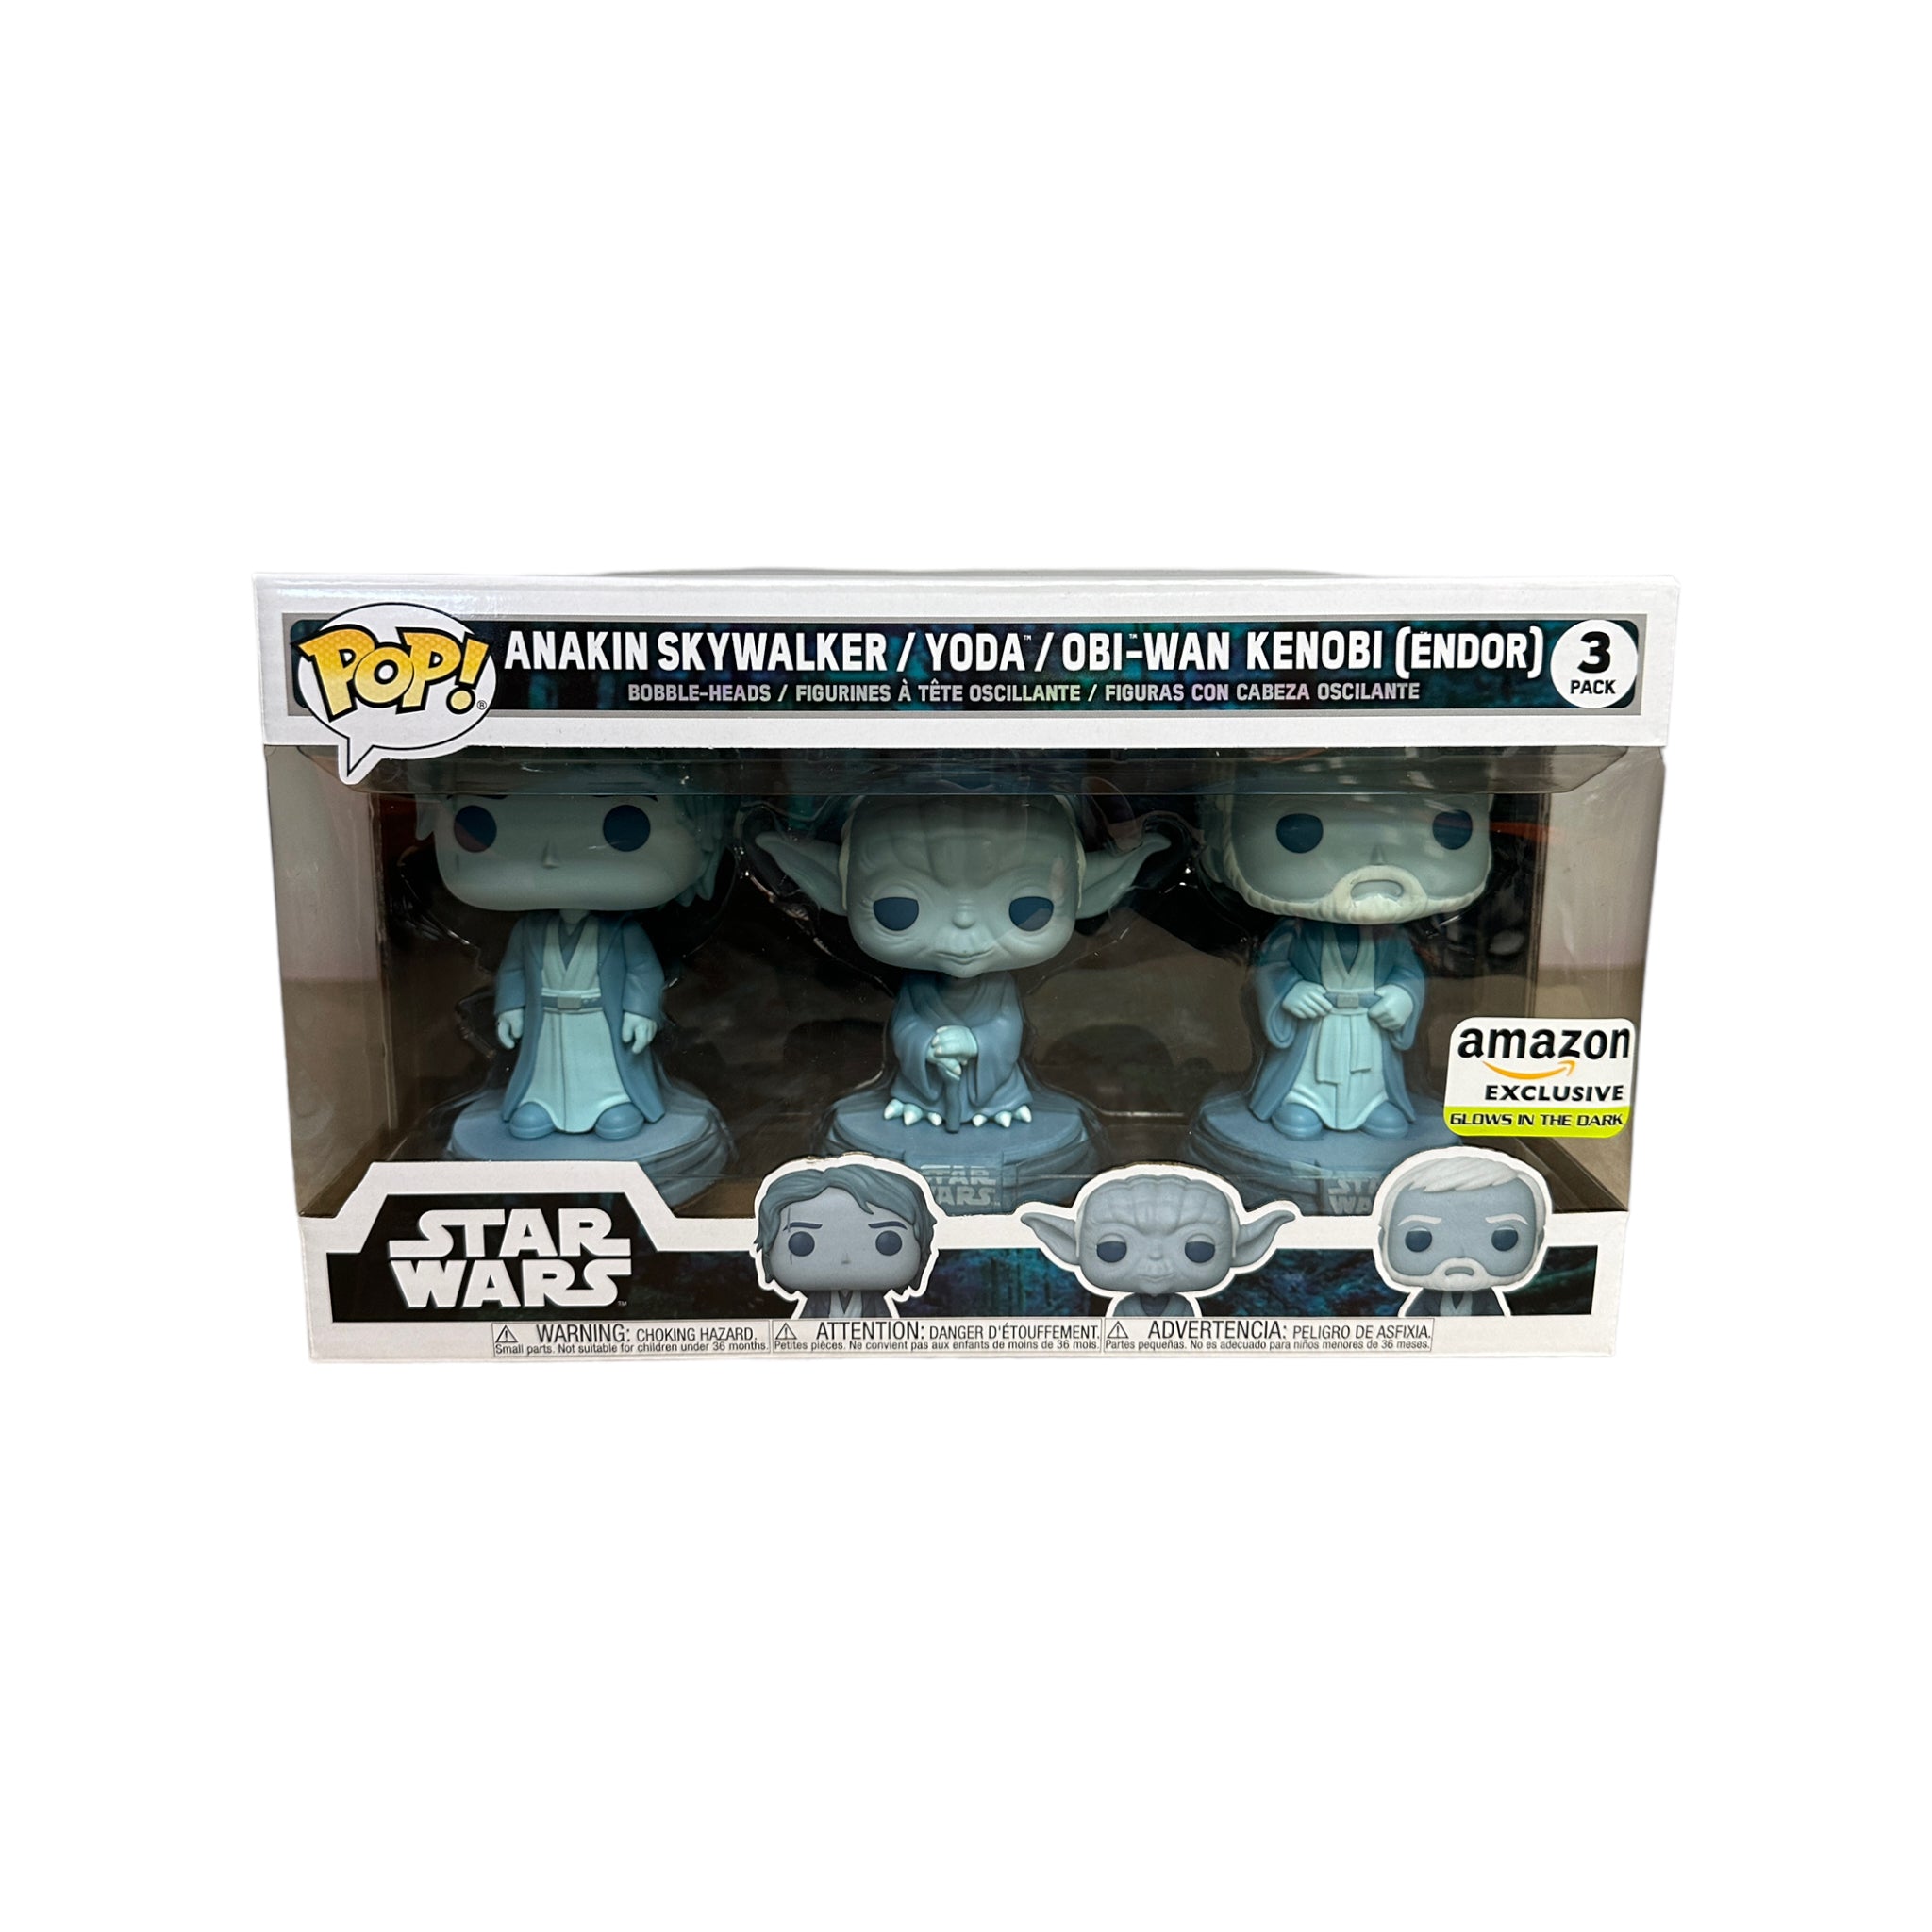 Anakin Skywalker / Yoda / Obi-Wan Kenobi (Glows in the Dark) 3 Pack Funko Pop! - Star Wars - Amazon Exclusive - Condition 8.75/10